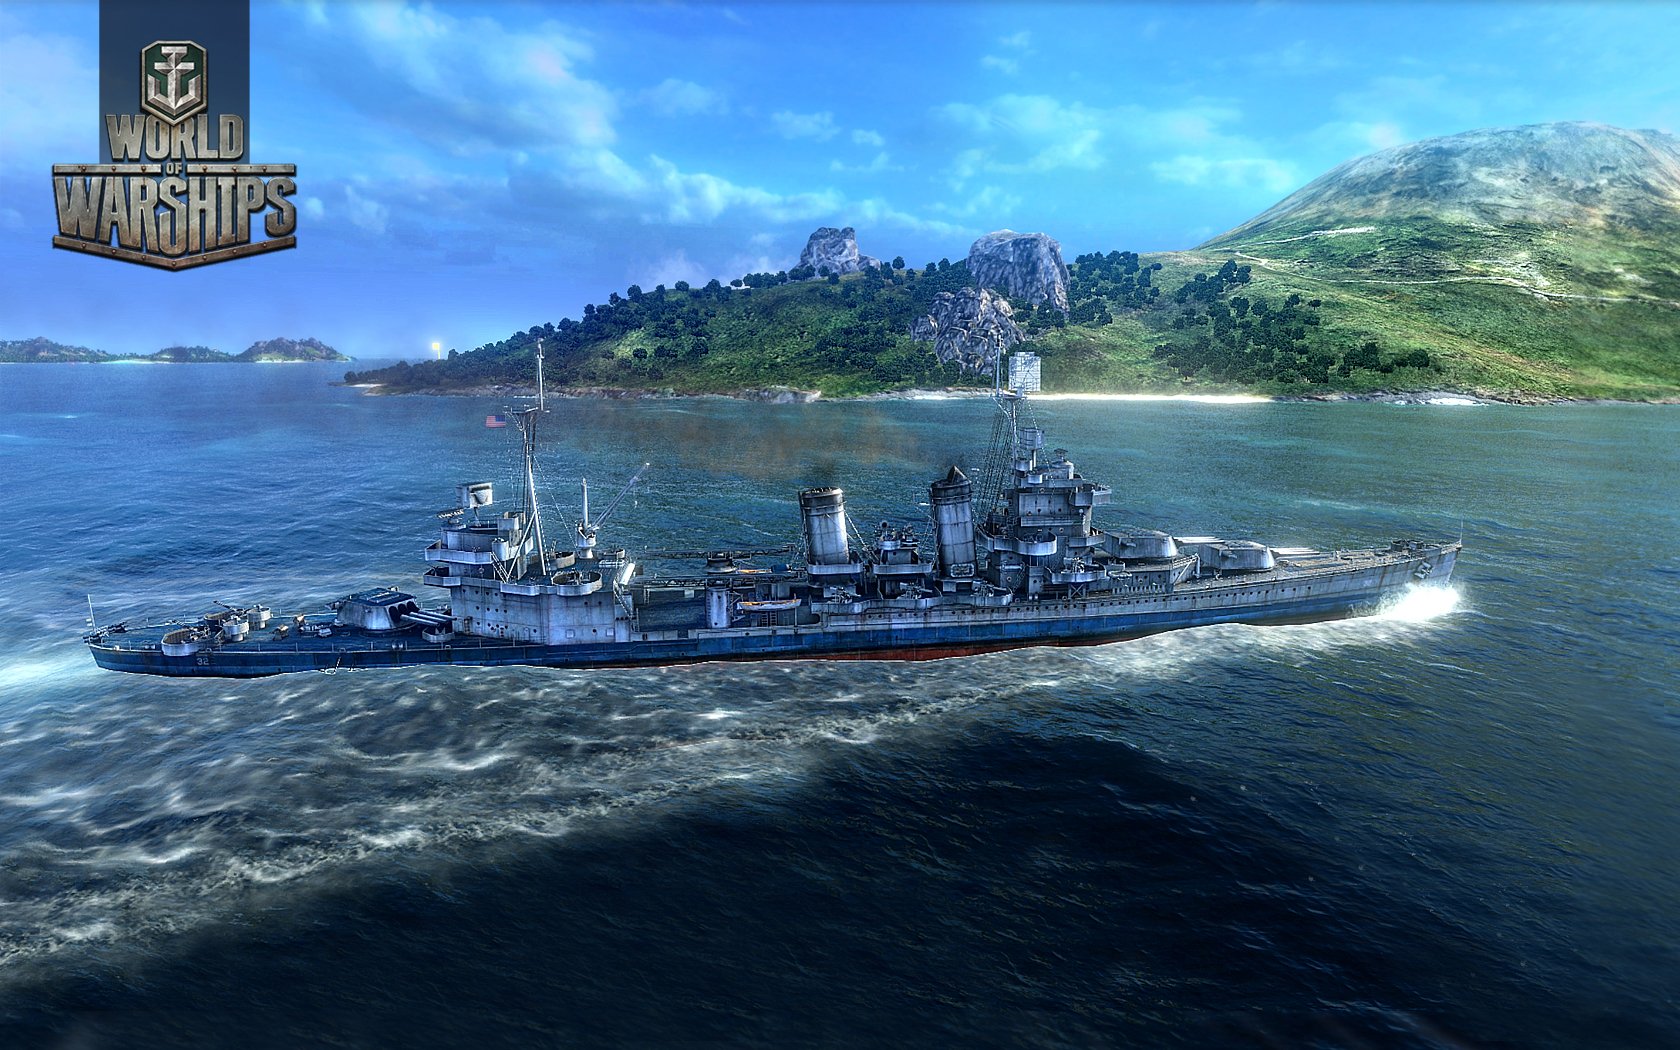 battleship online. ...